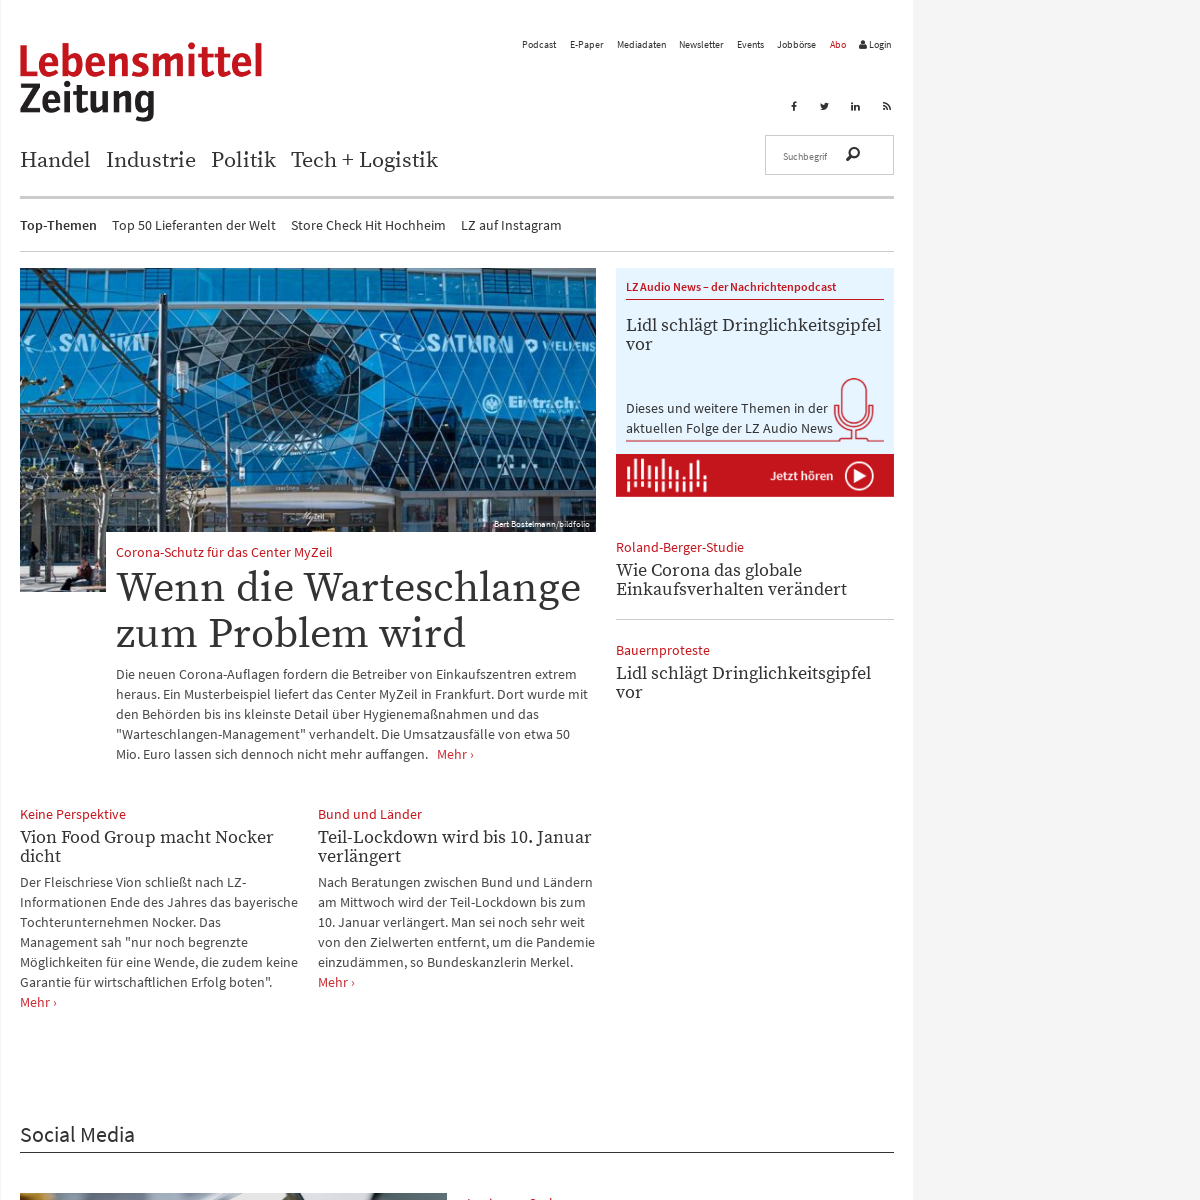 A complete backup of lebensmittelzeitung.net